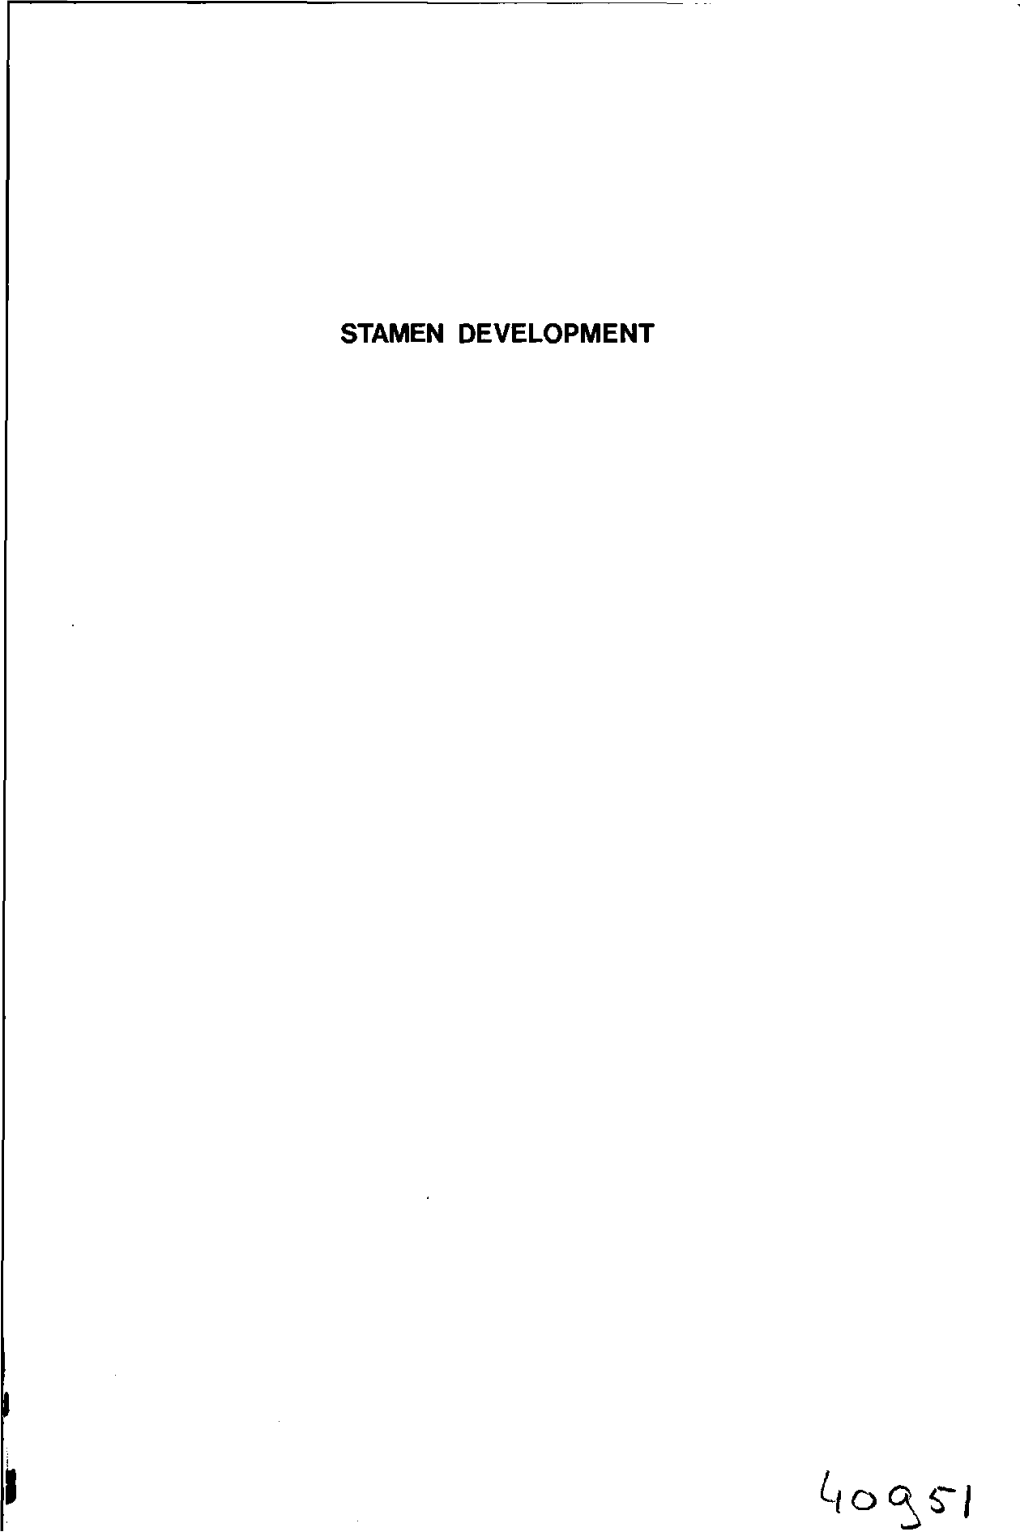 Stamen Development